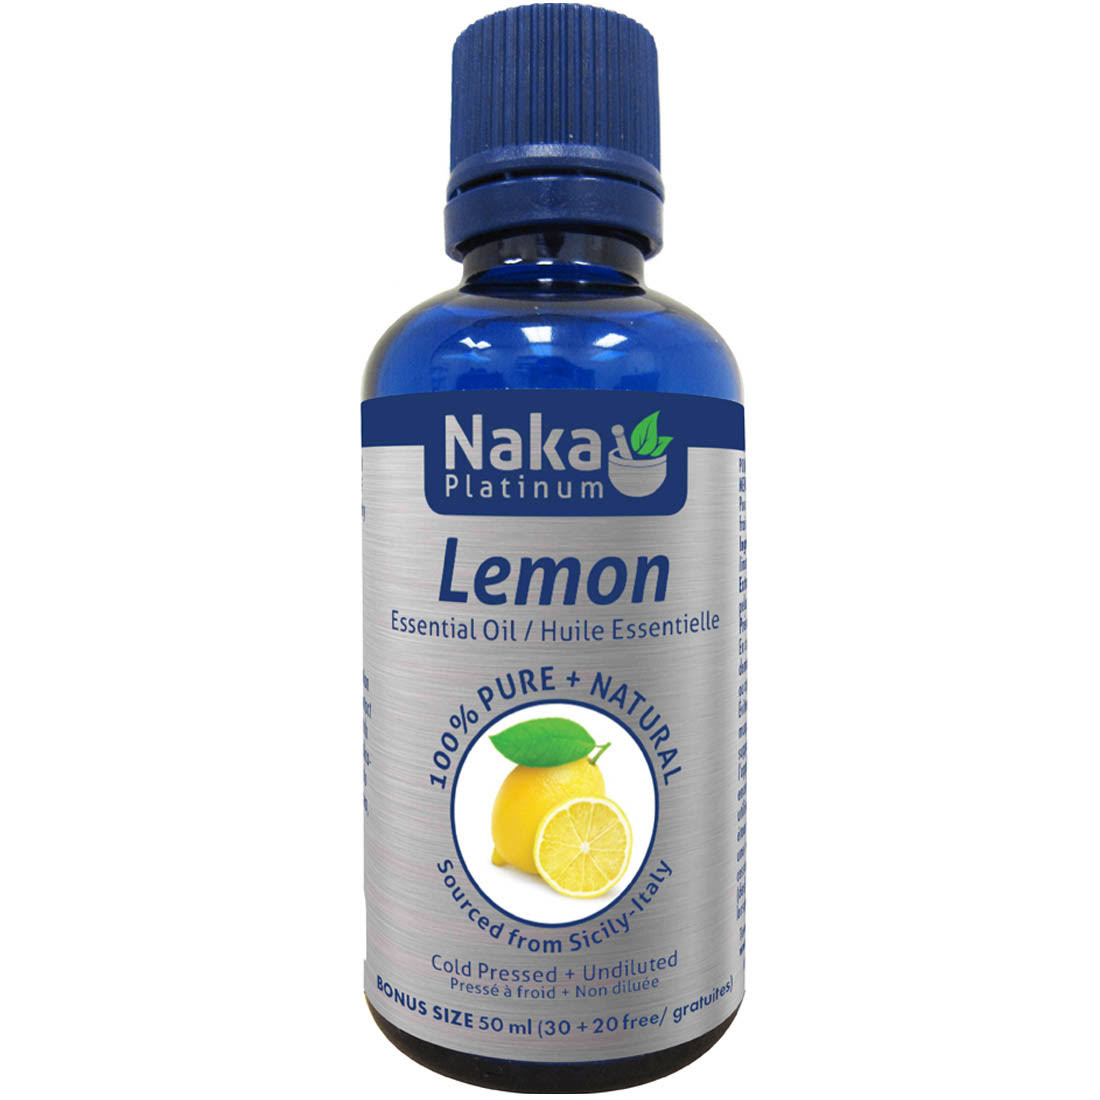 Naka Platinum Lemon Essential Oil, 50ml